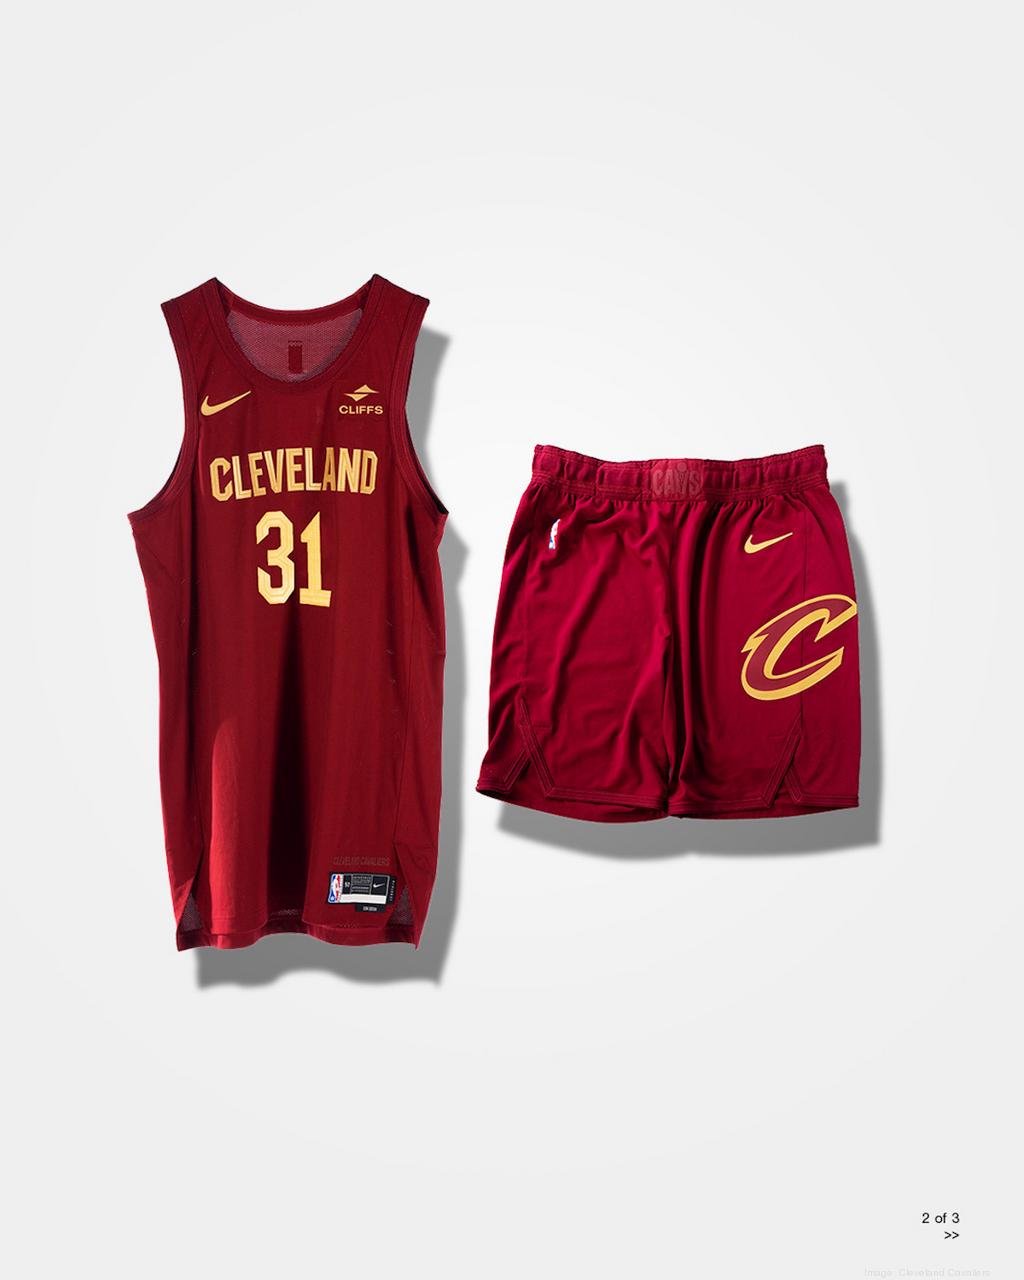 Cleveland Cavaliers Apparel & Gear